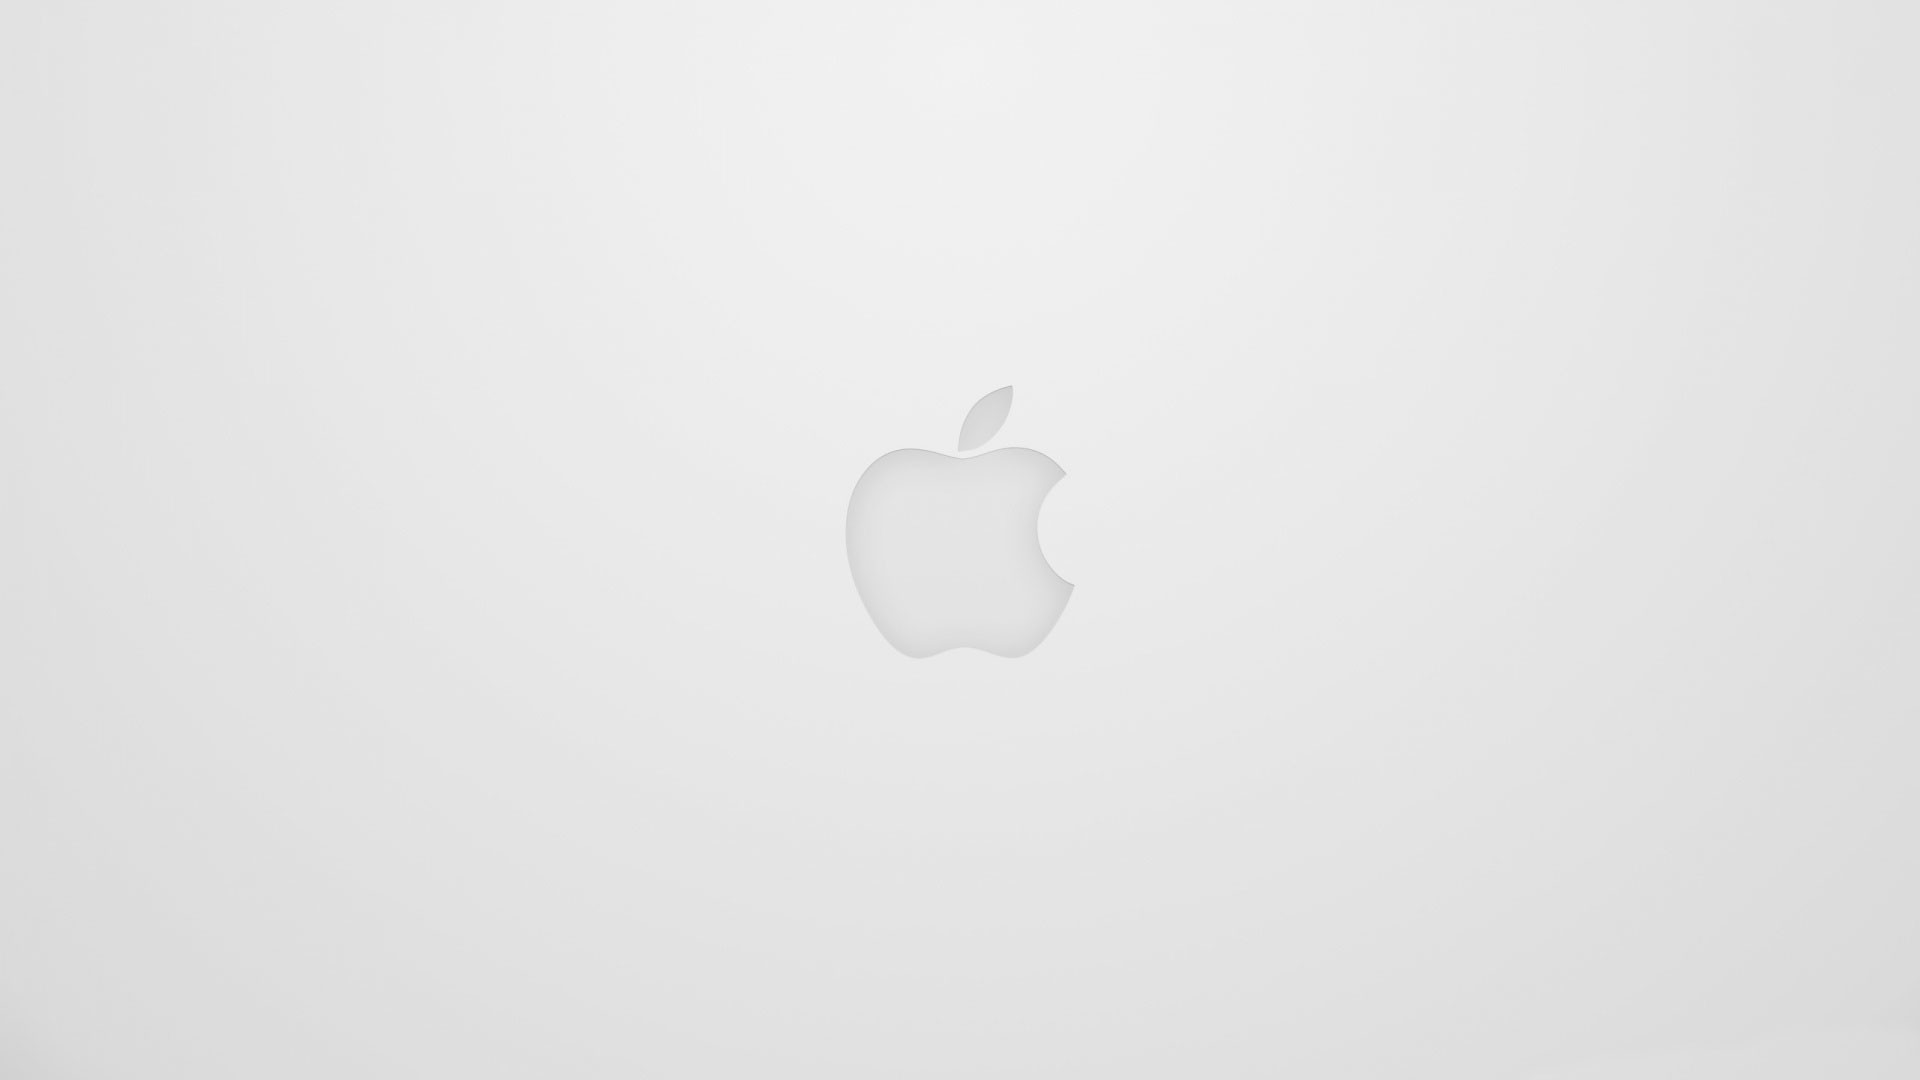 1920x1080 hd pics photos attractive apple logo white professional stunning hd quality  desktop background wallpaper